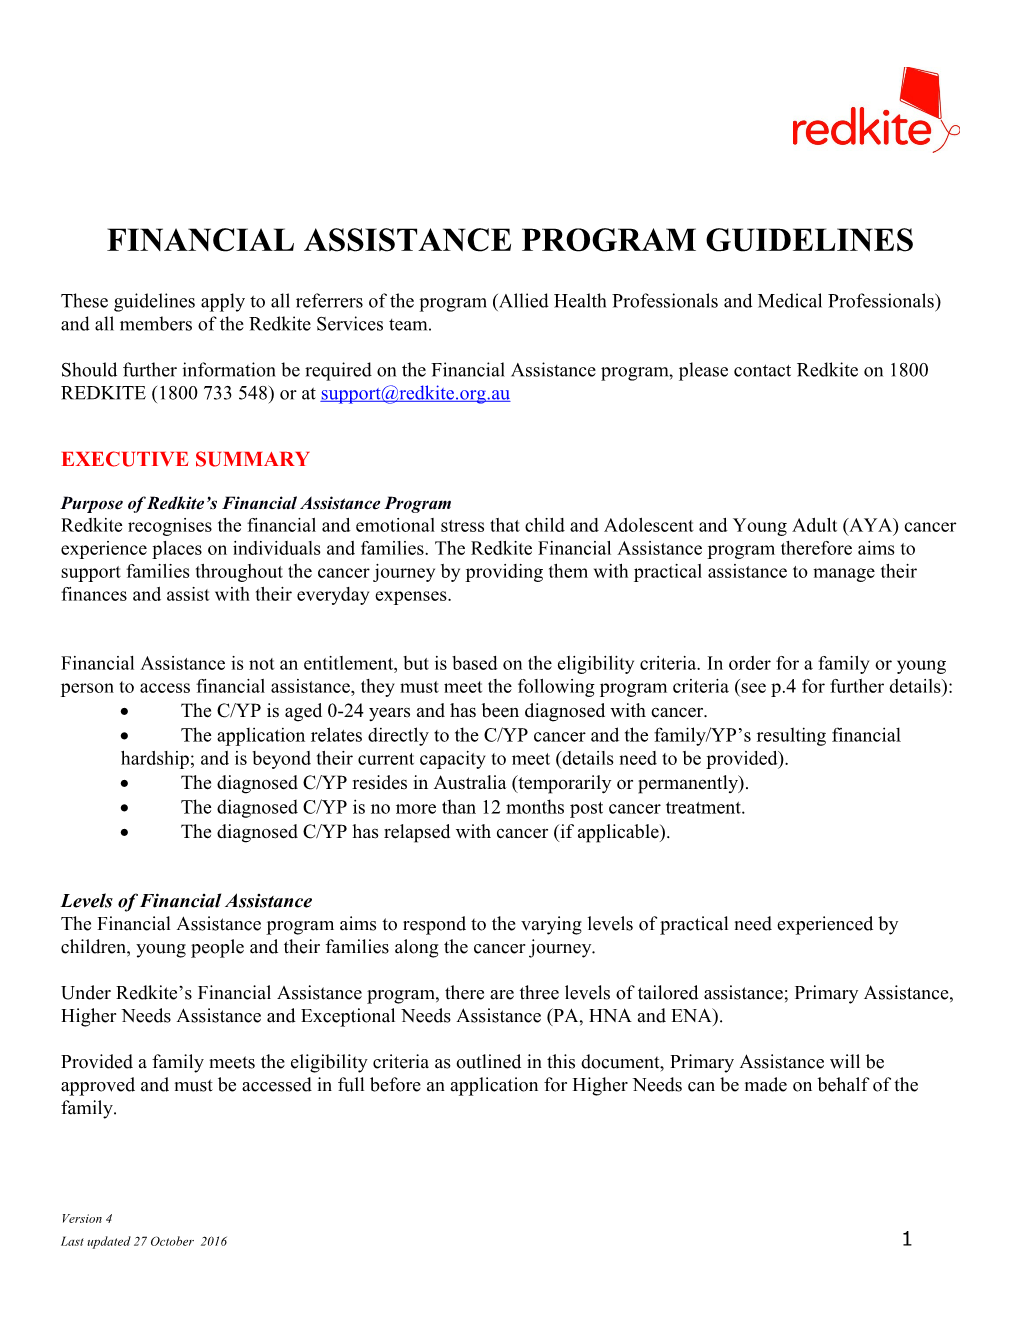 Financial Assistance Program Guidelines